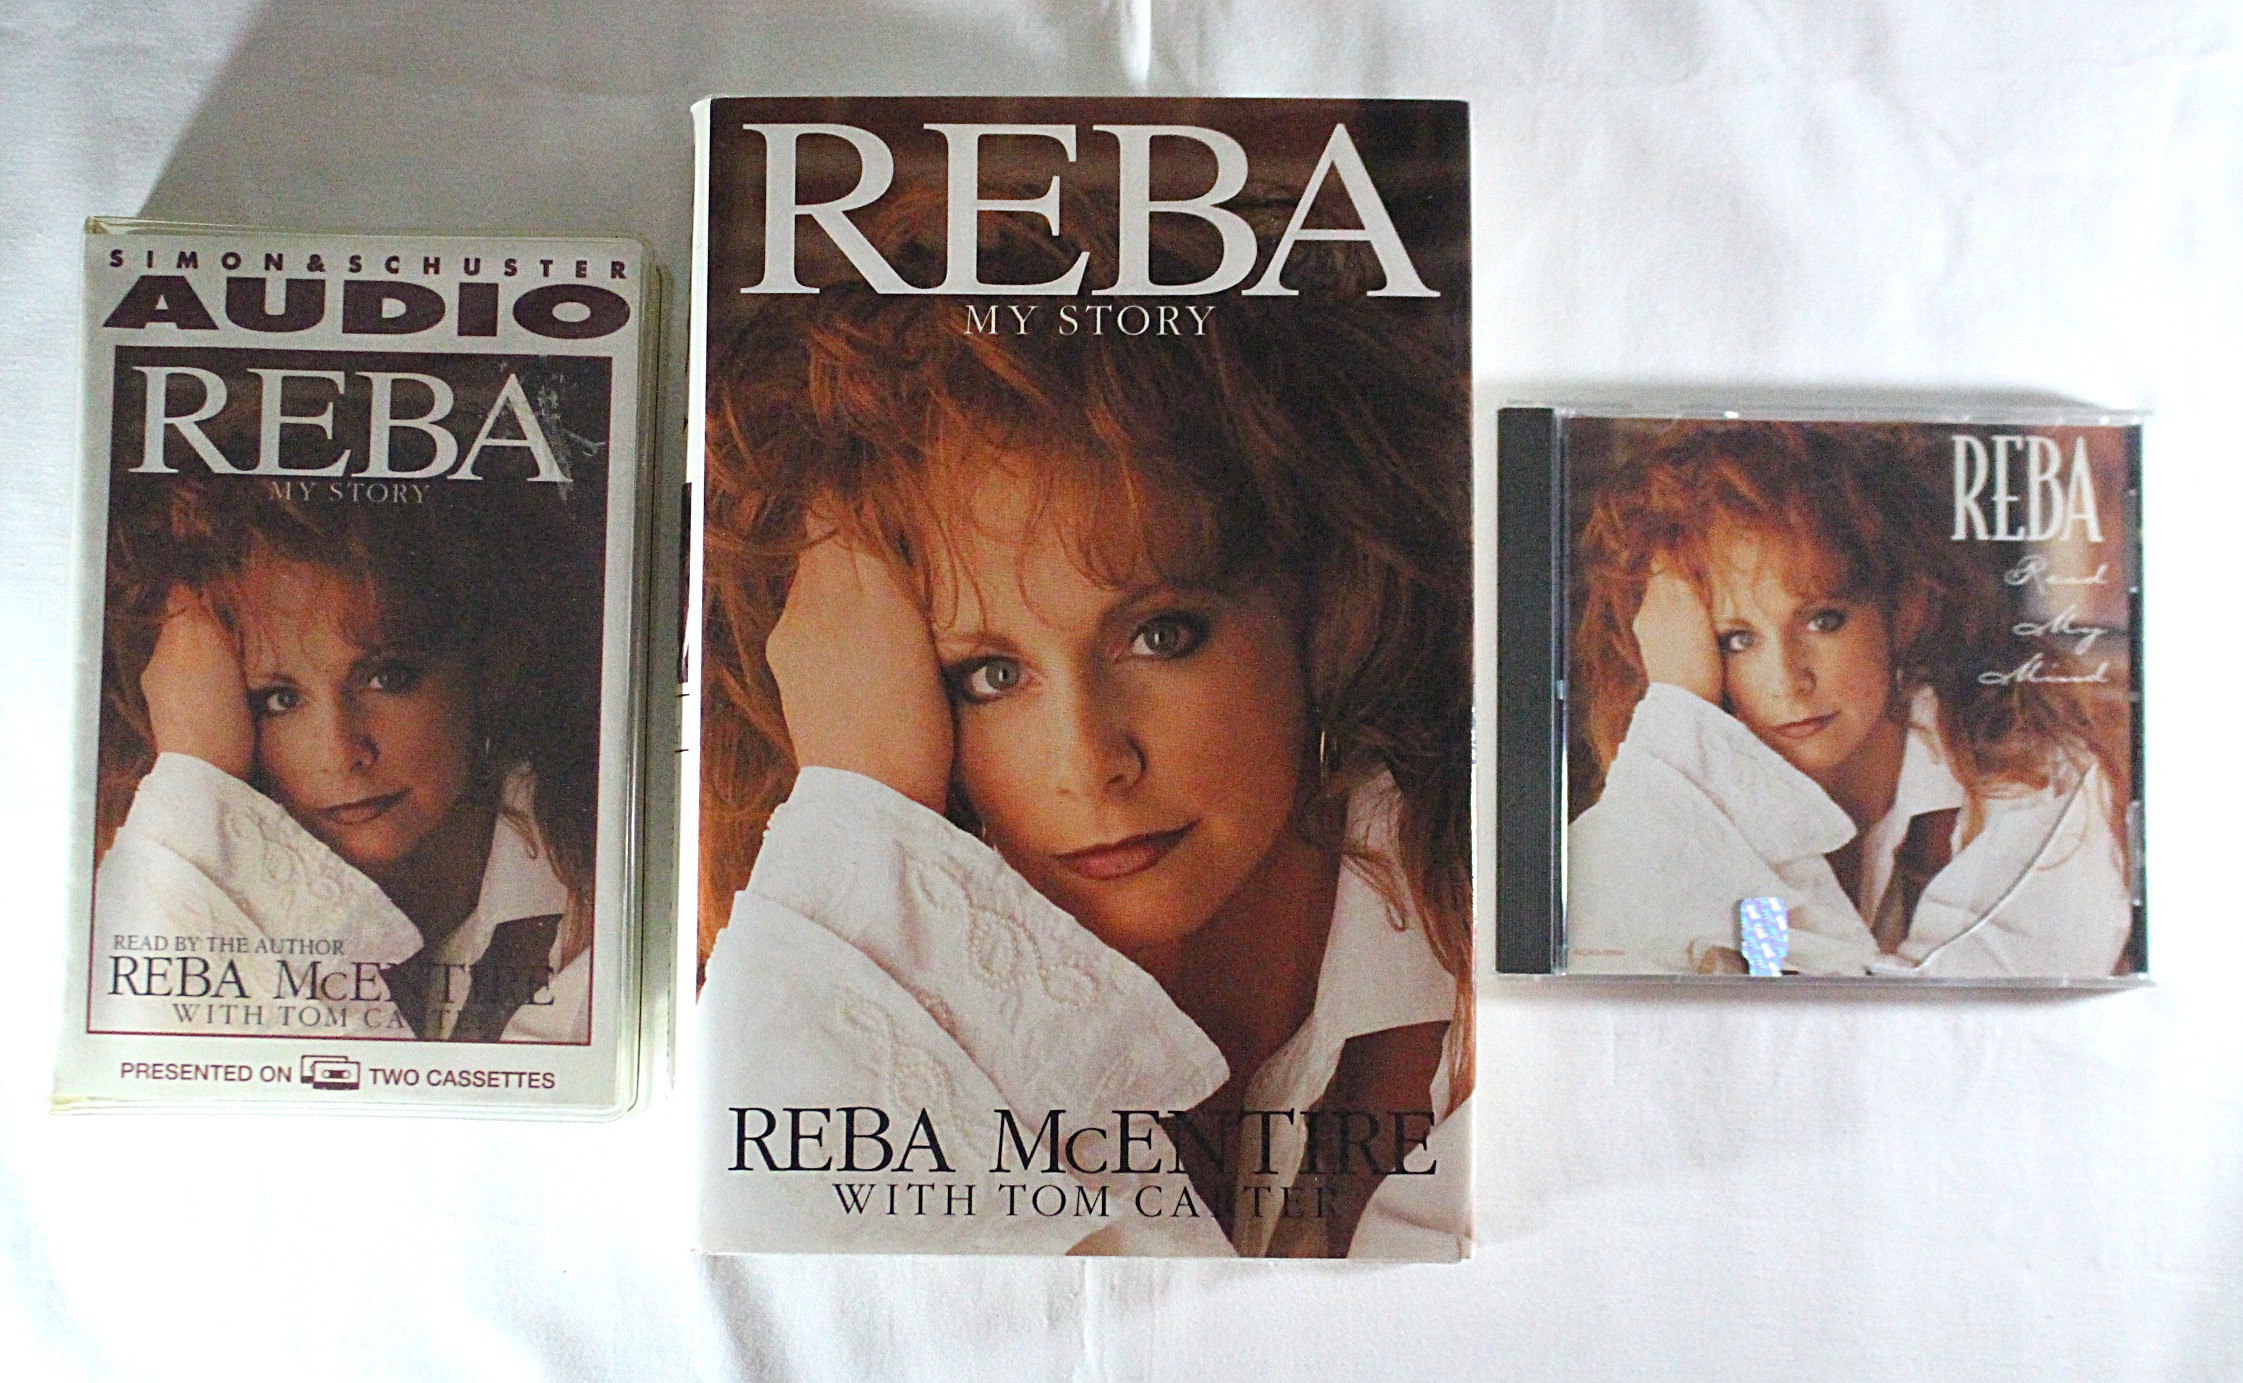 Reba McEntire - book / CD / Tape “My Story” 